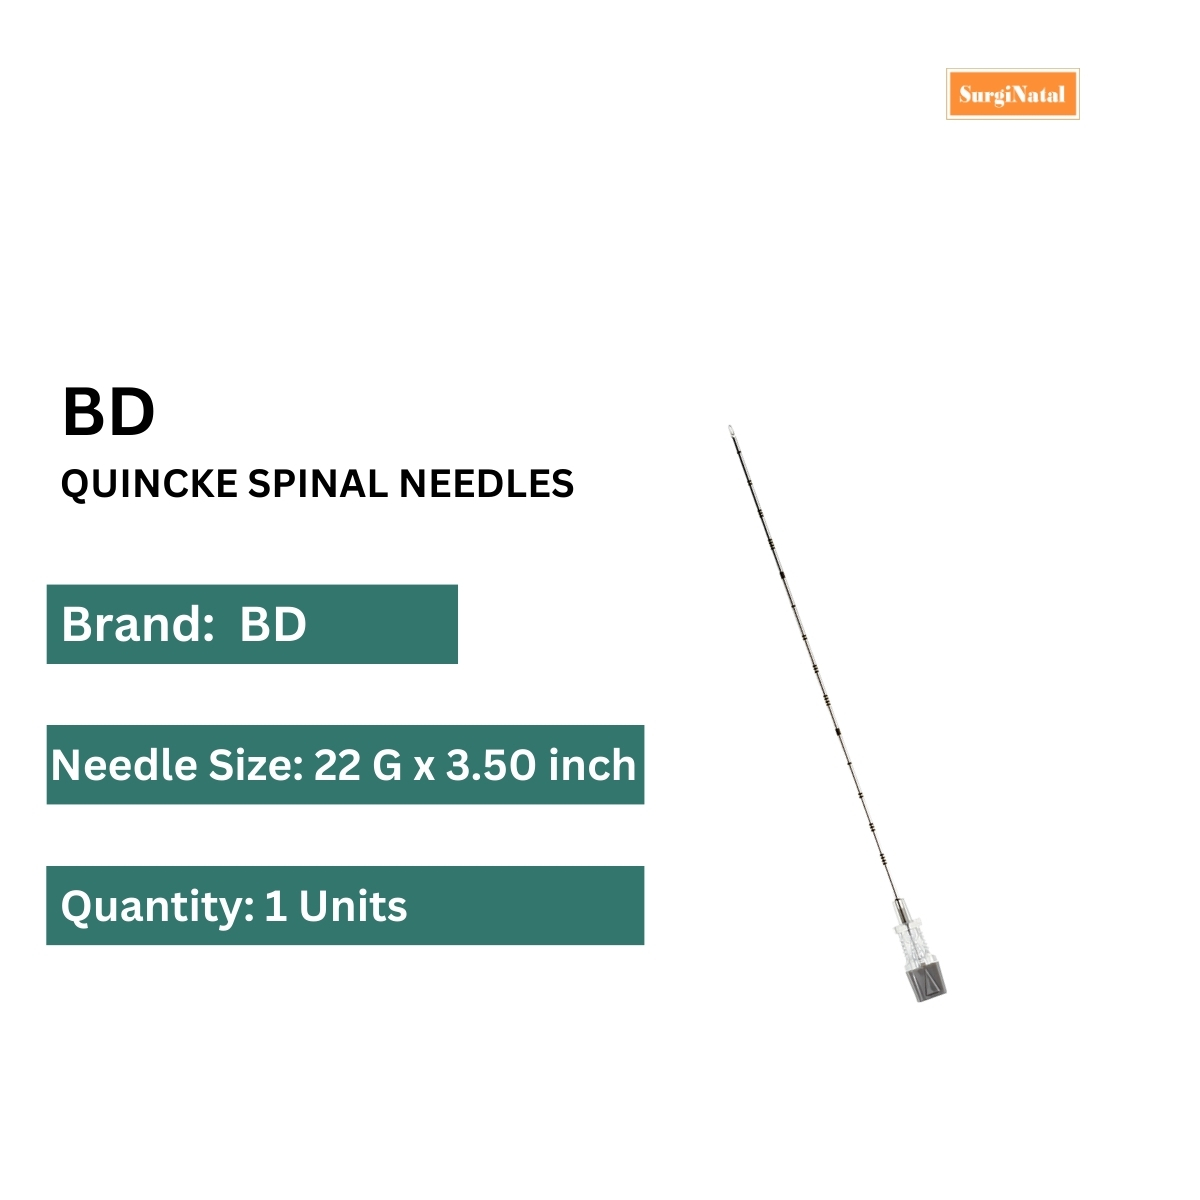 bd quincke spinal needles